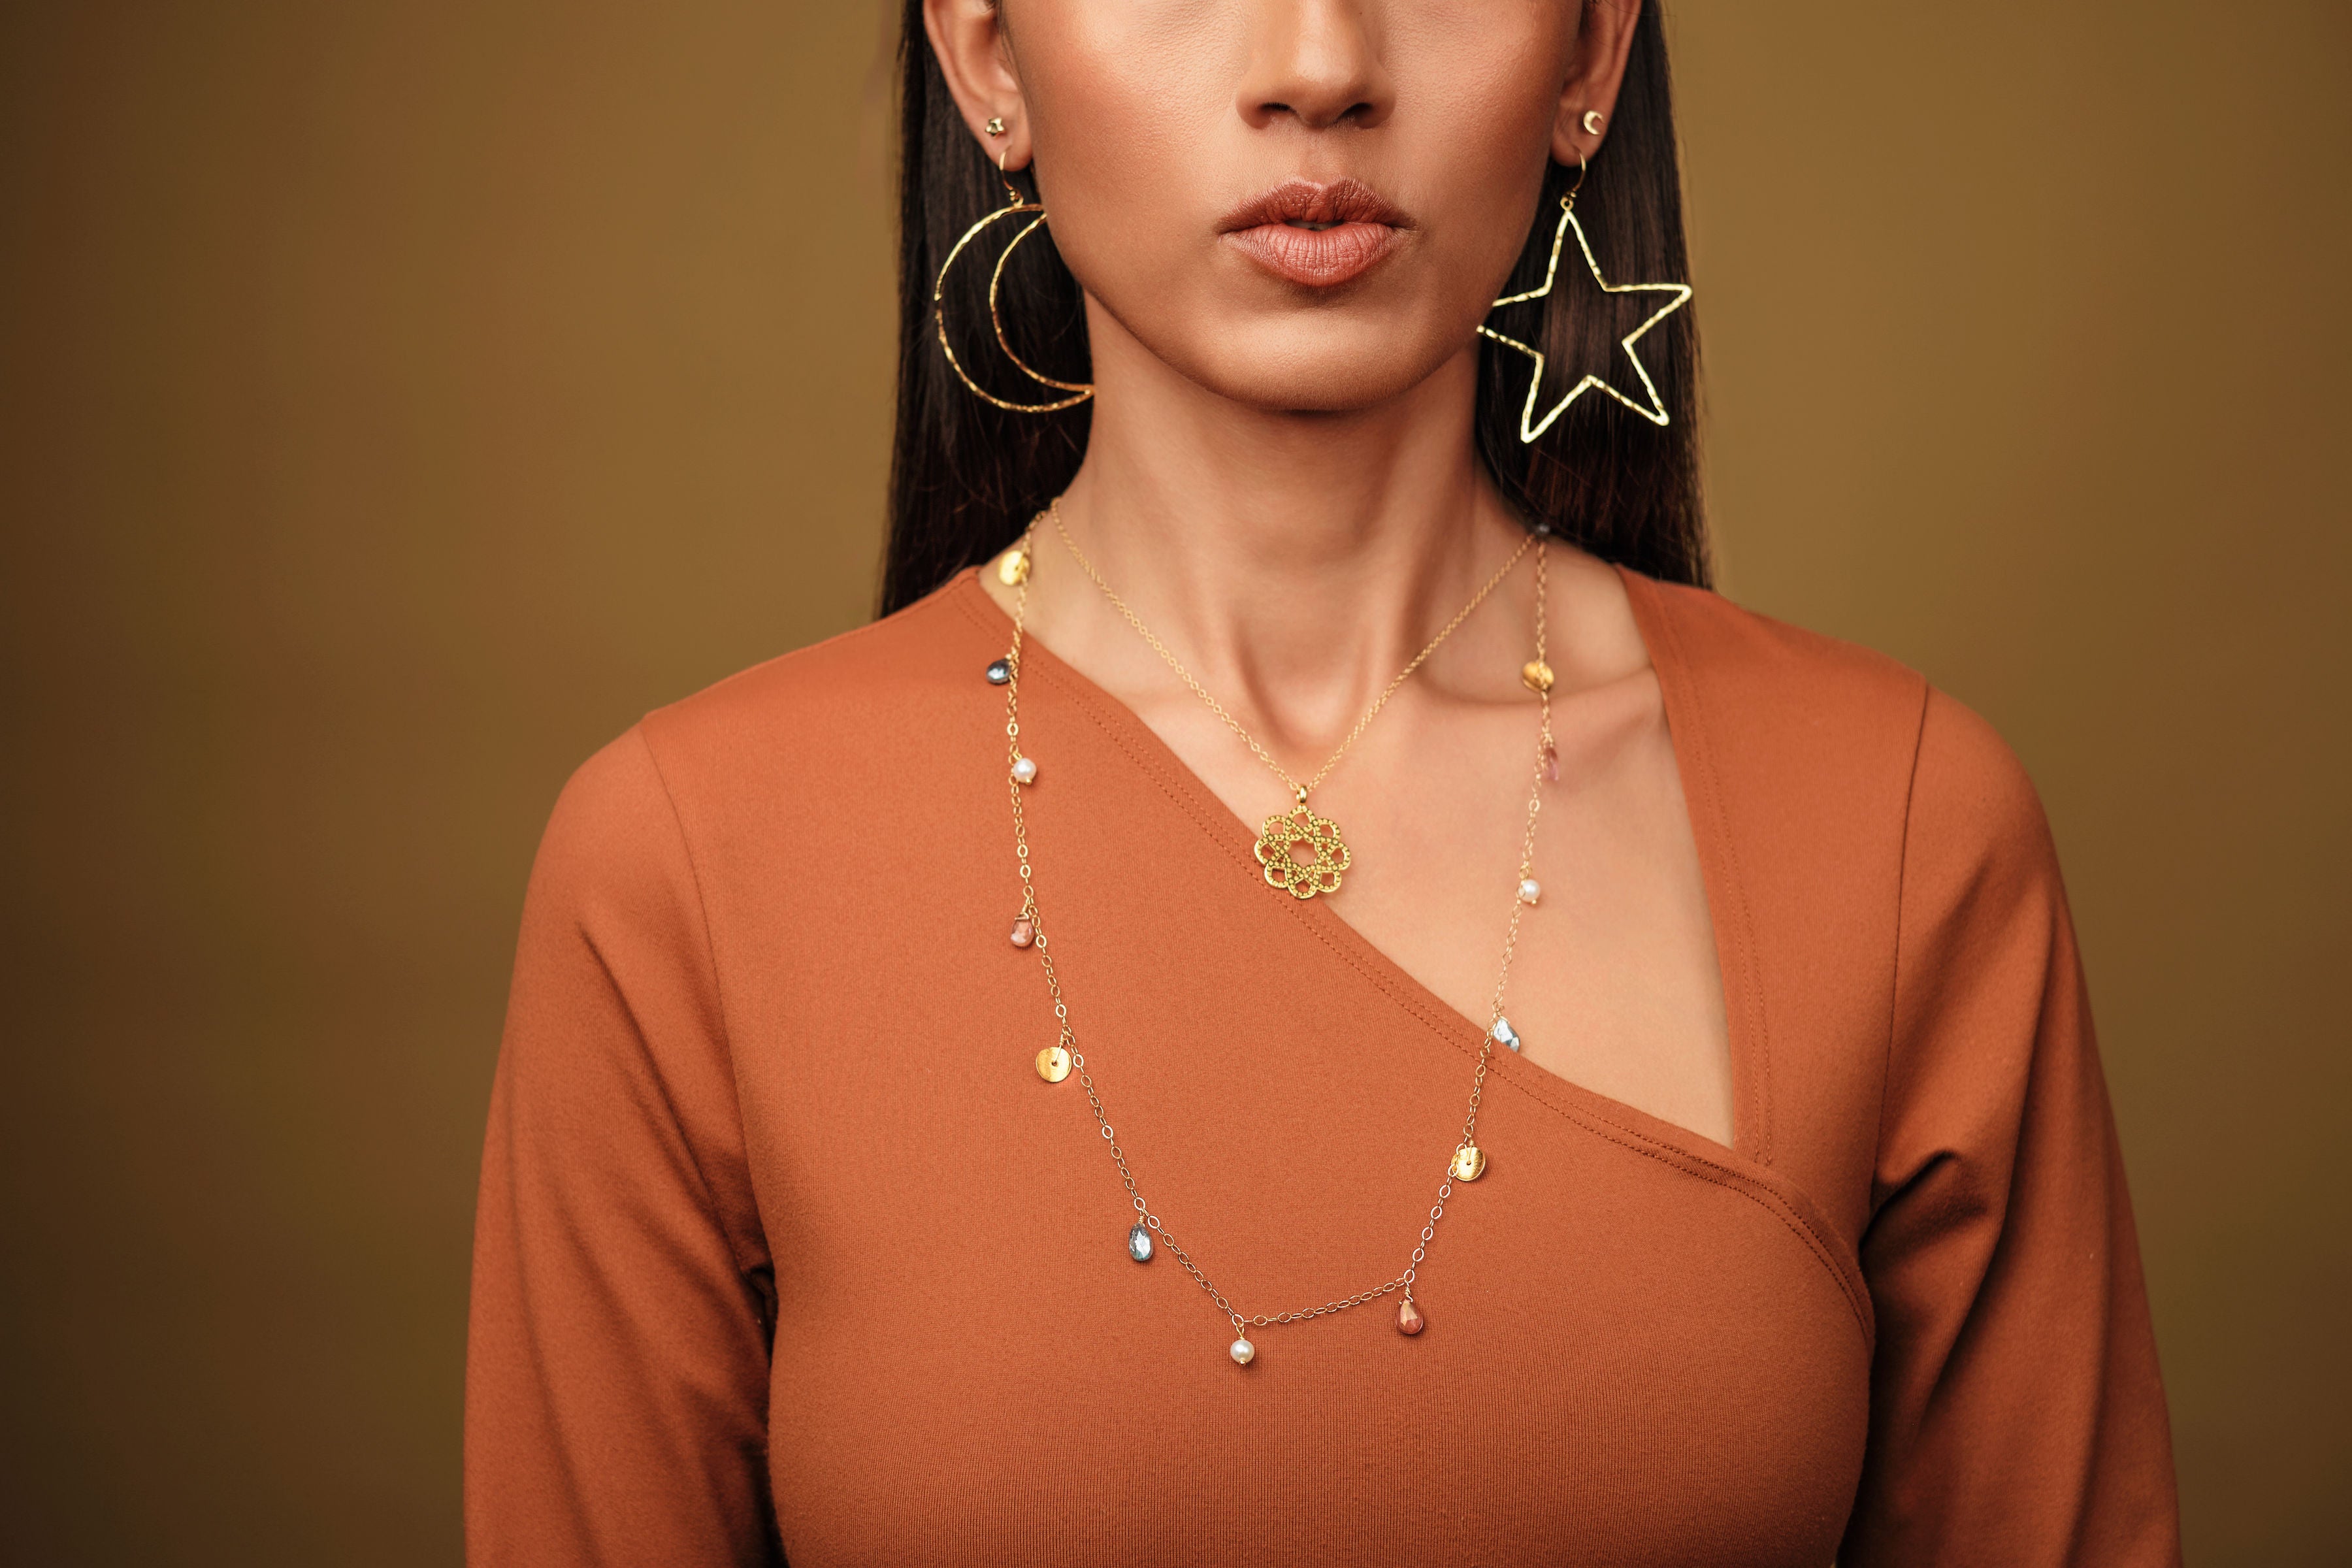 Davina Star + Moon Earrings